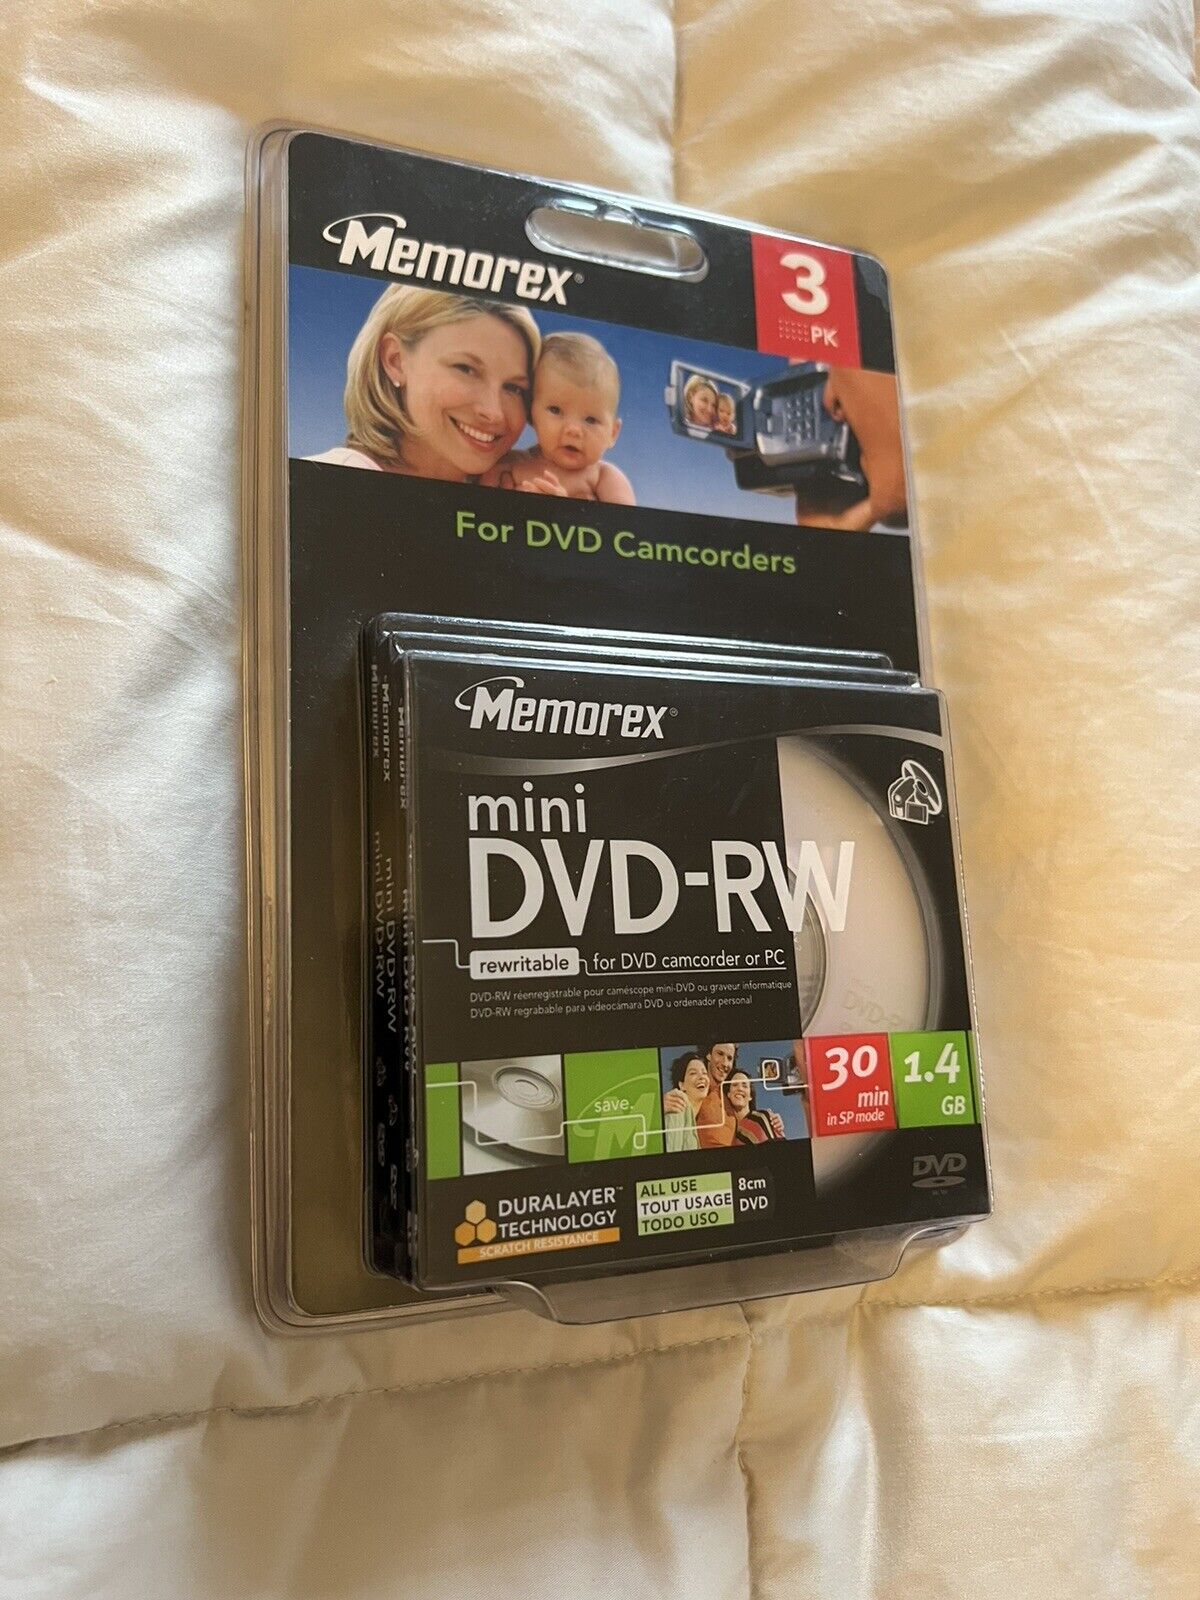 Memorex Mini DVD-RW 3 Pack 2X 1.4GB 30 min Single Sided, DVD Camcorders /PC NEW